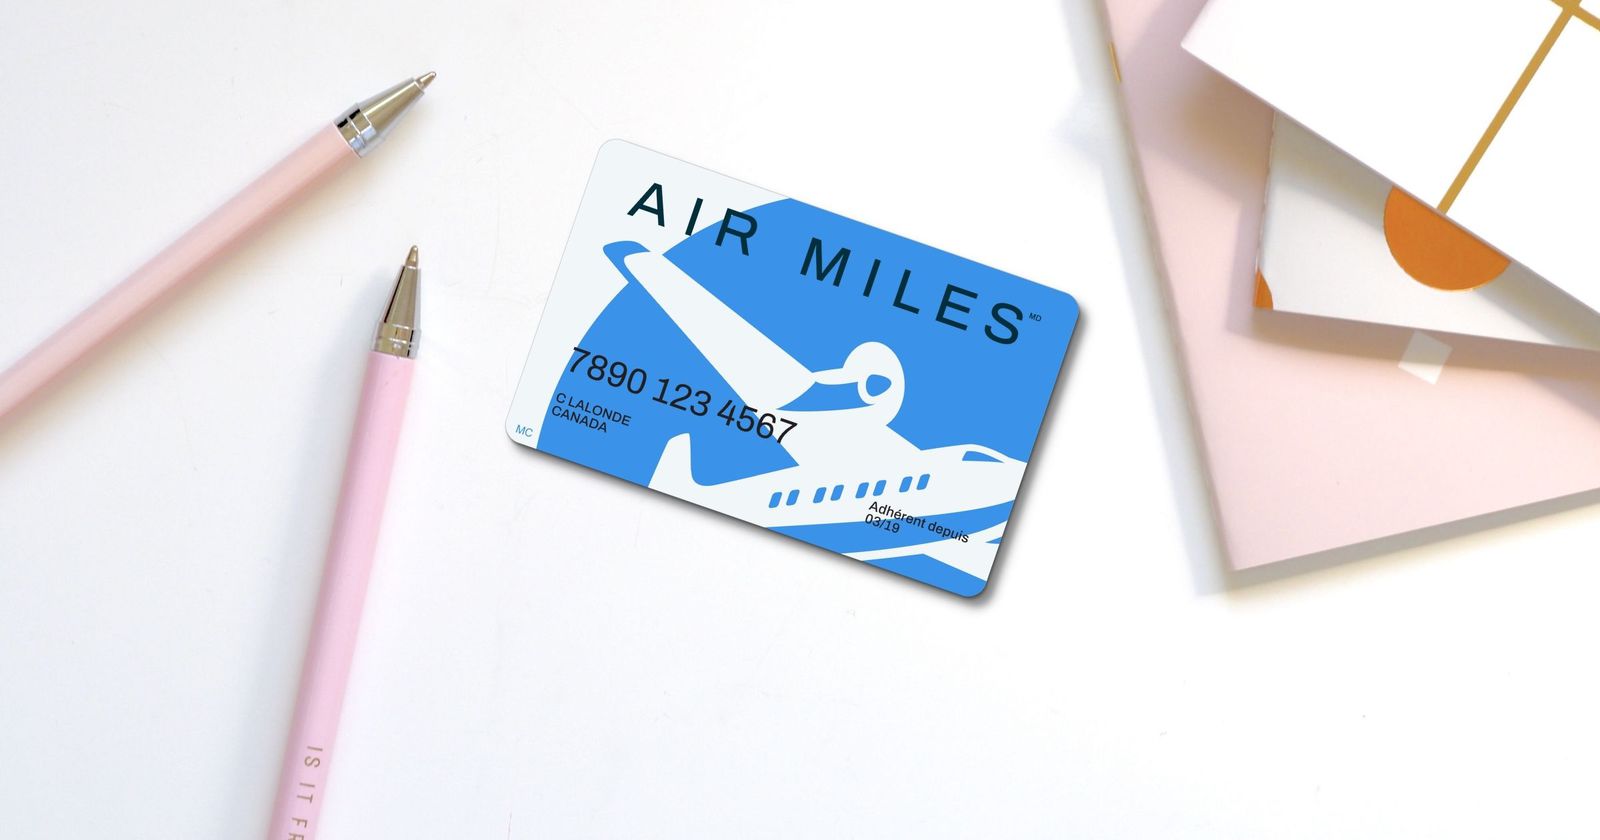 air miles card pen featured